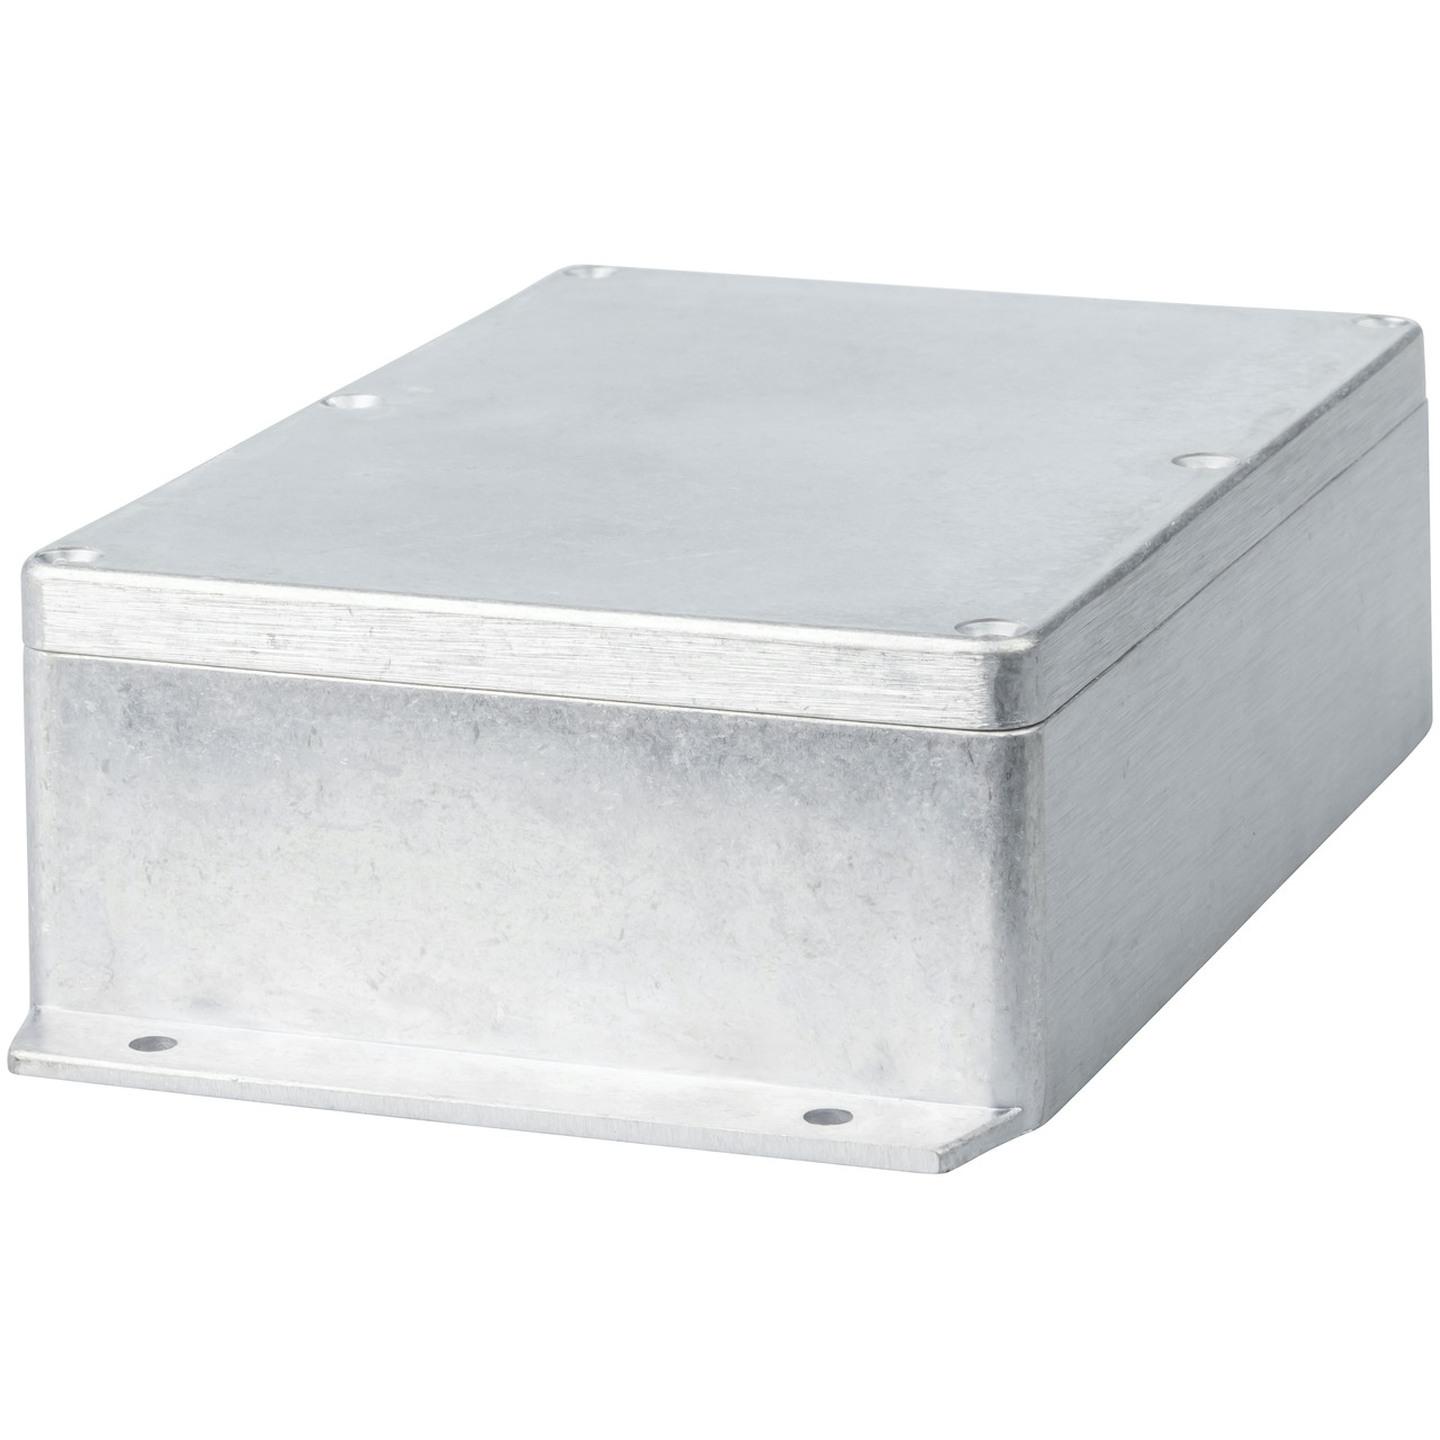 IP65 Sealed Diecast Aluminium Boxes - Flanged - 171Wx121Dx55Hmm